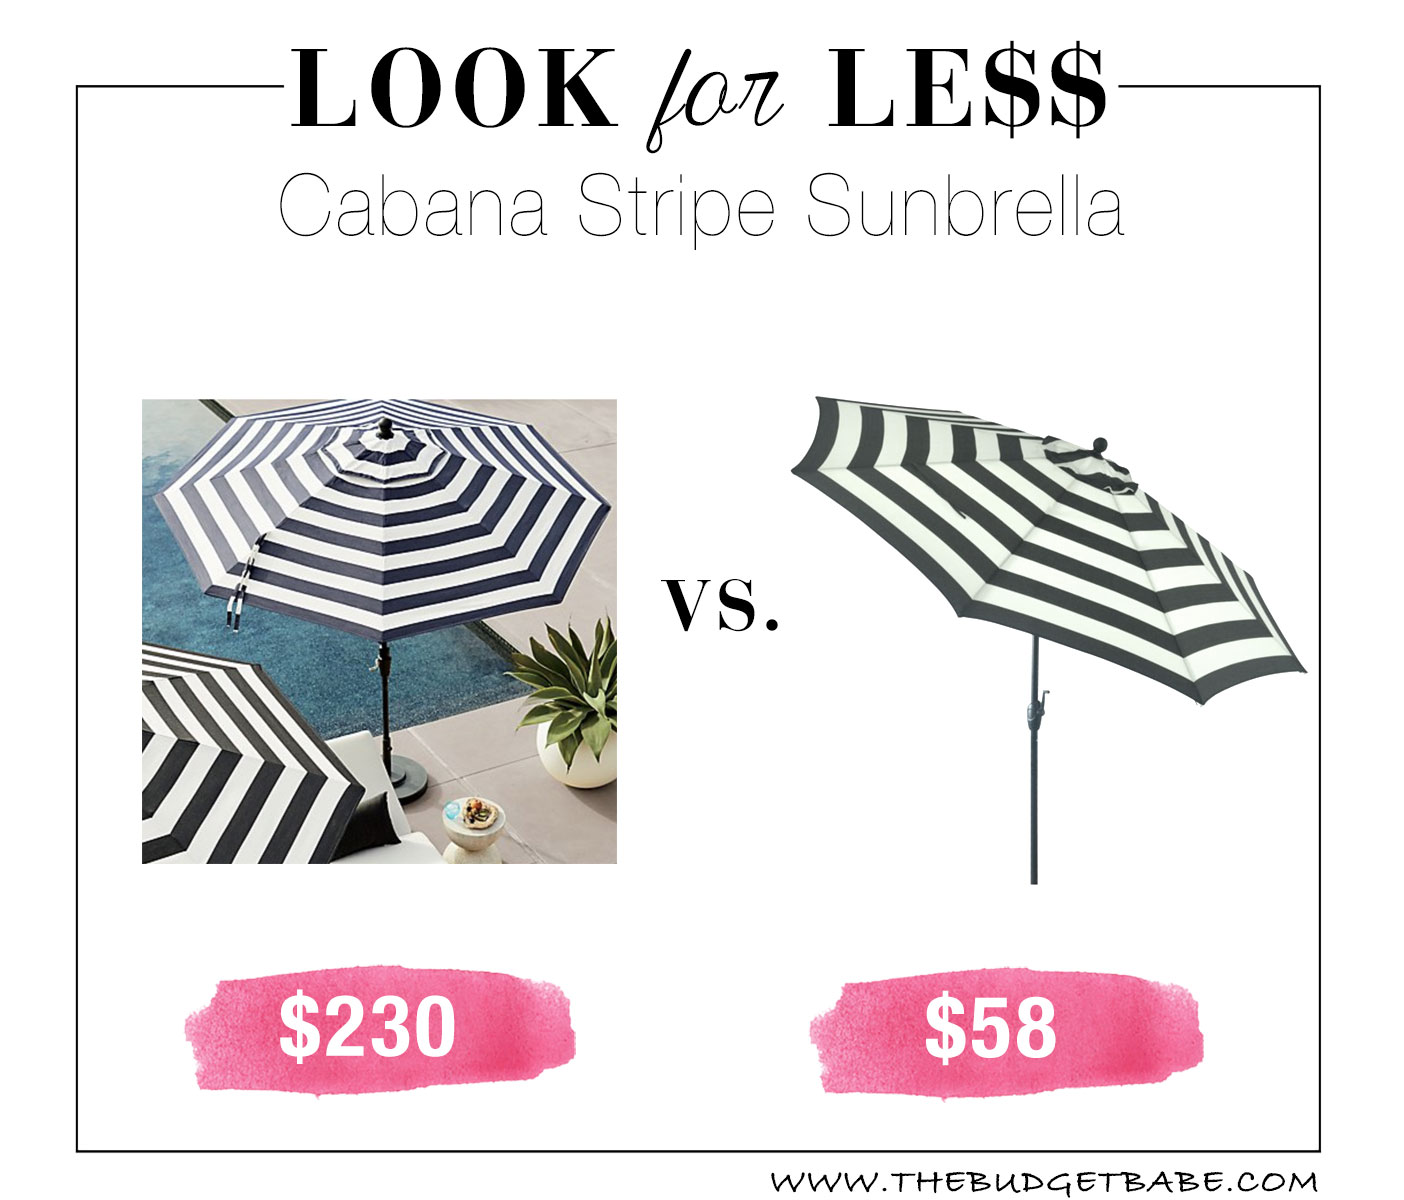 Cabana stripe umbrella look for less